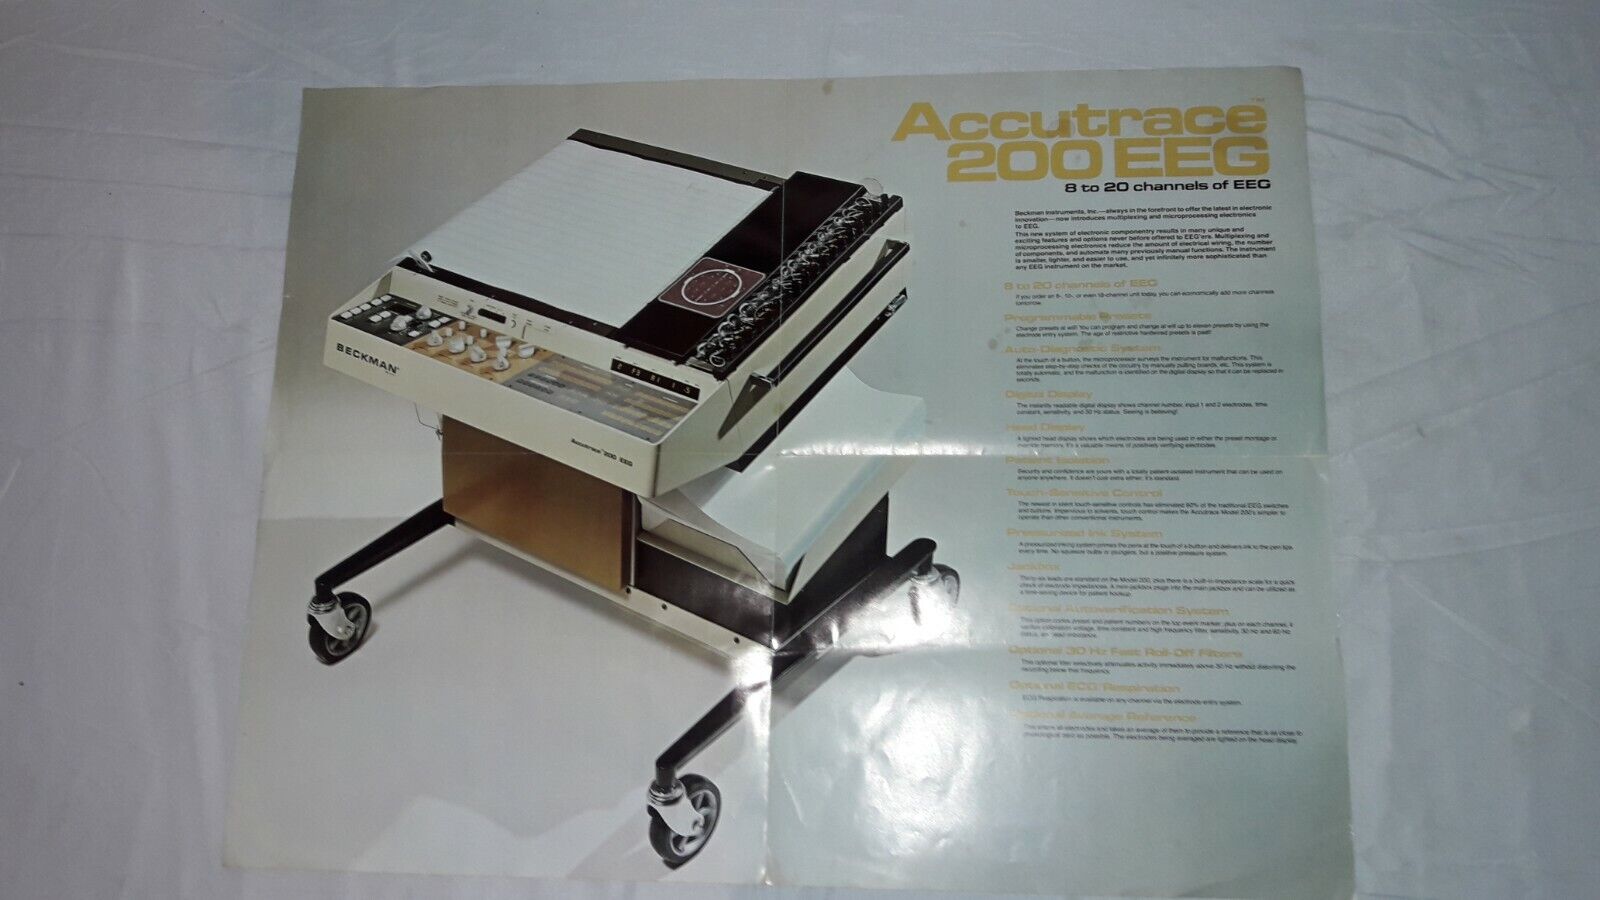 1970s Beckman Instruments Inc. Accutrace 200 EEG Computer Advertising Poster